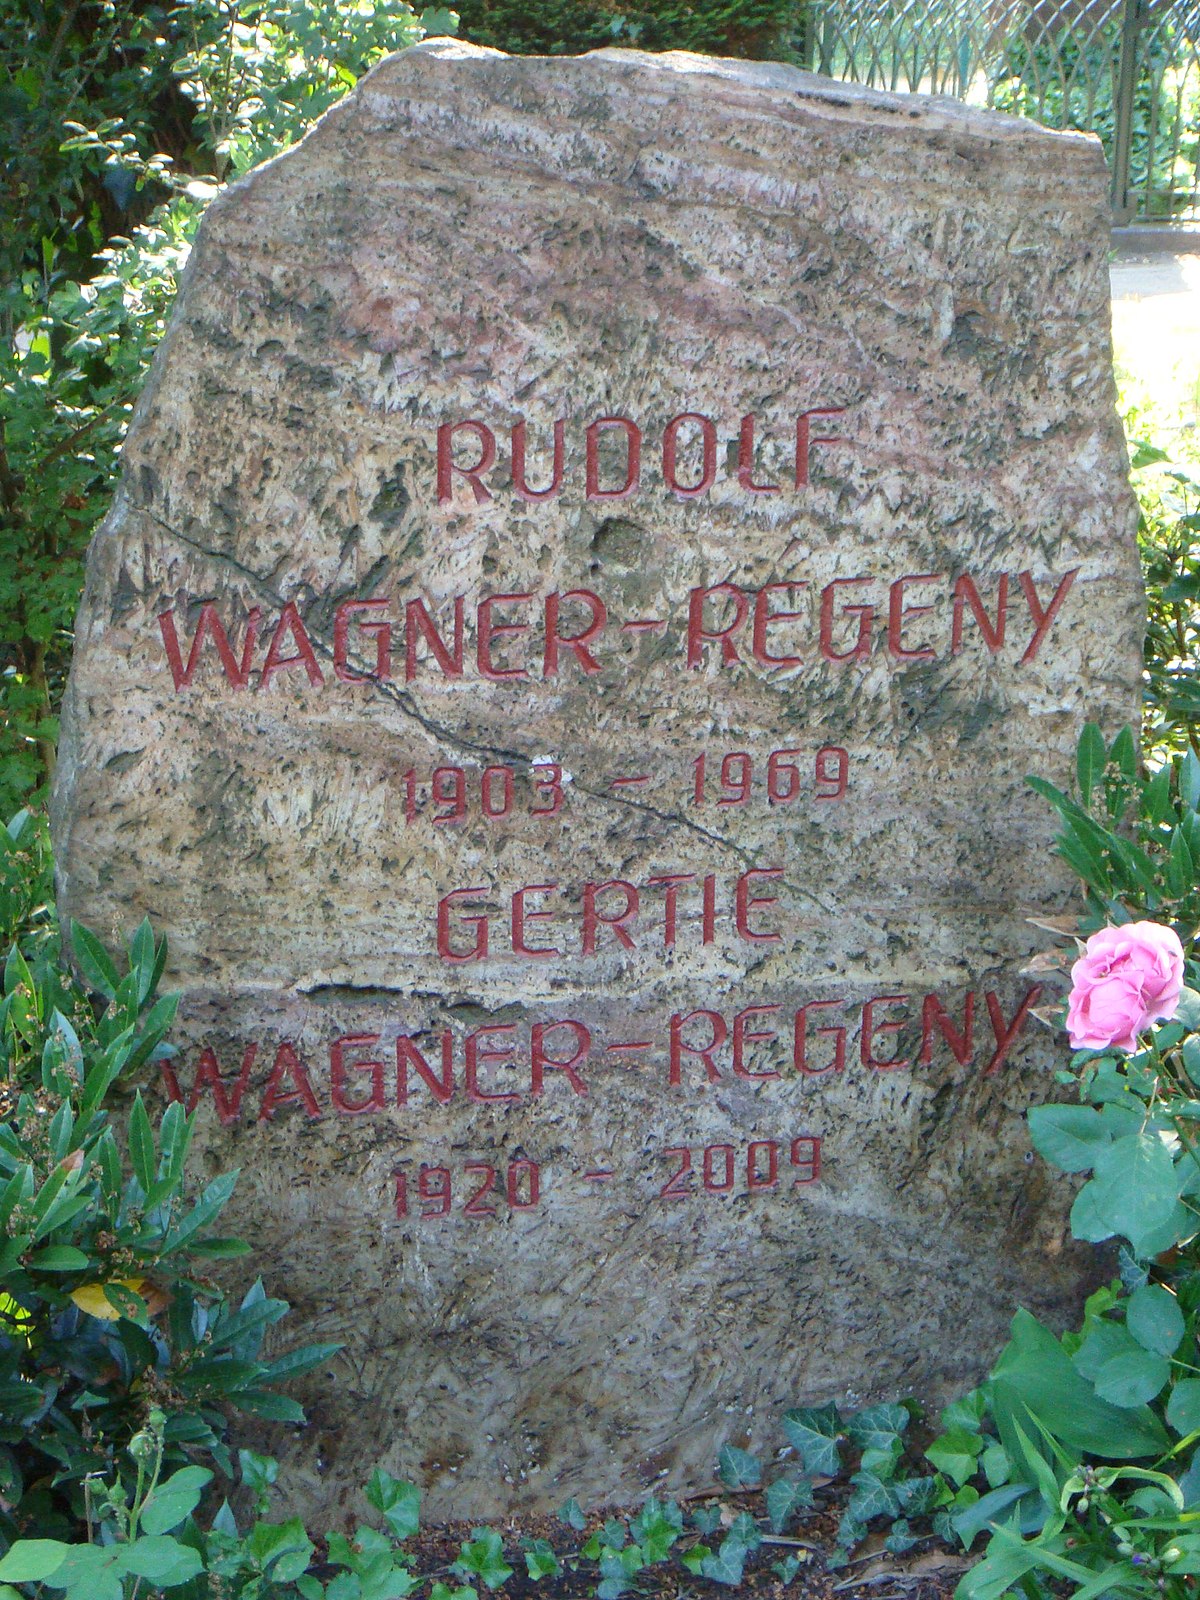 Rudolf Wagner - Wikipedia